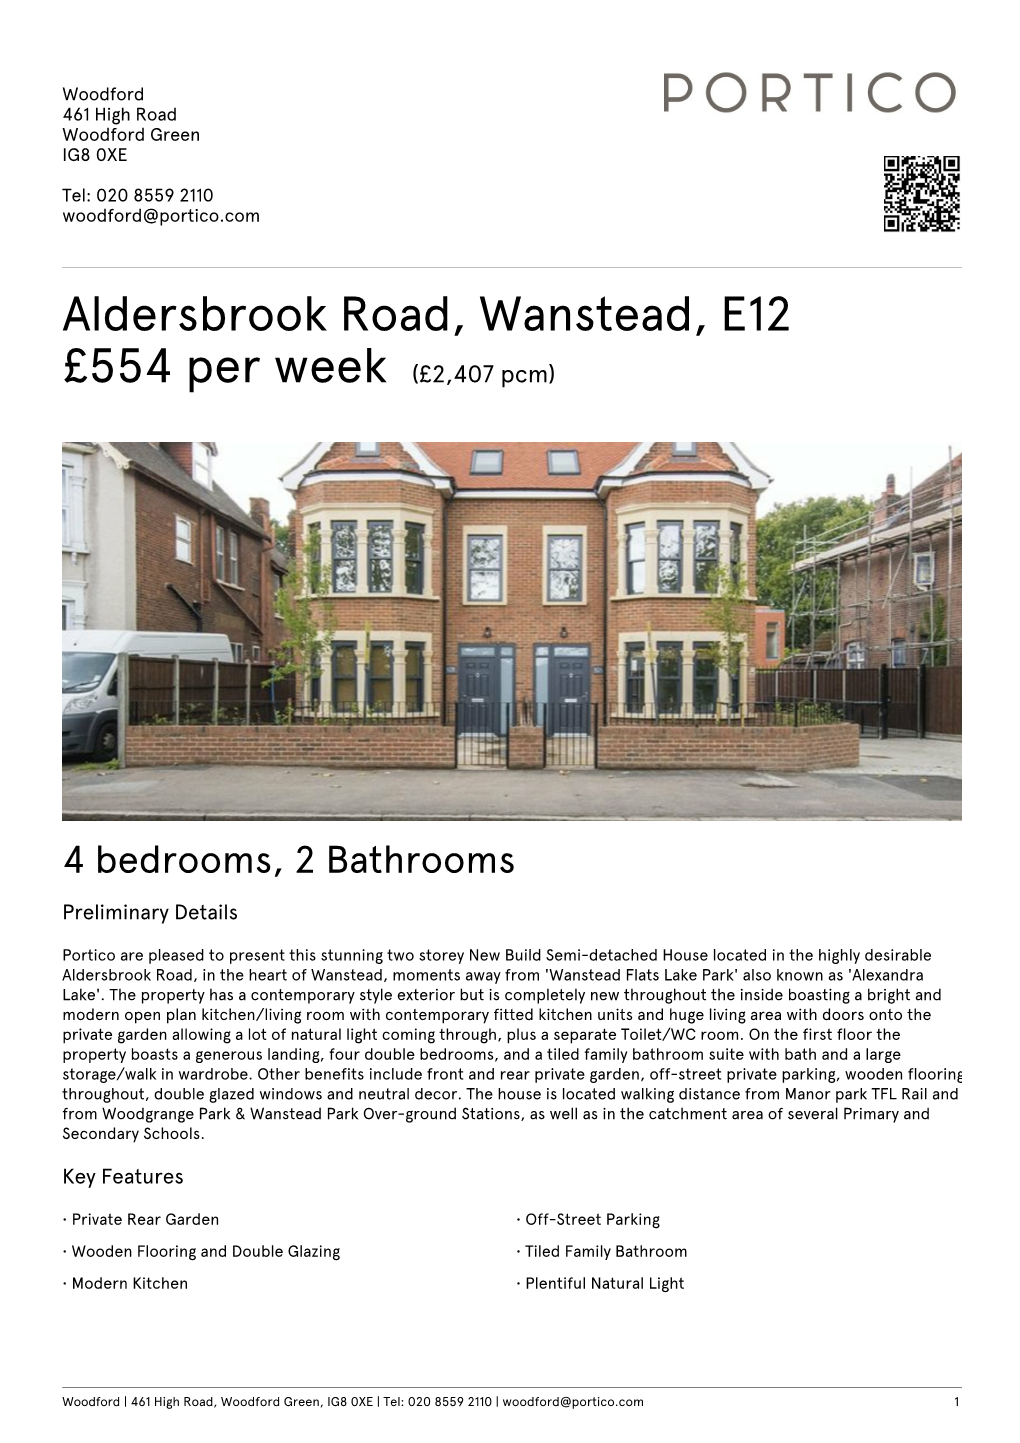 Aldersbrook Road, Wanstead, E12 £554 Per Week